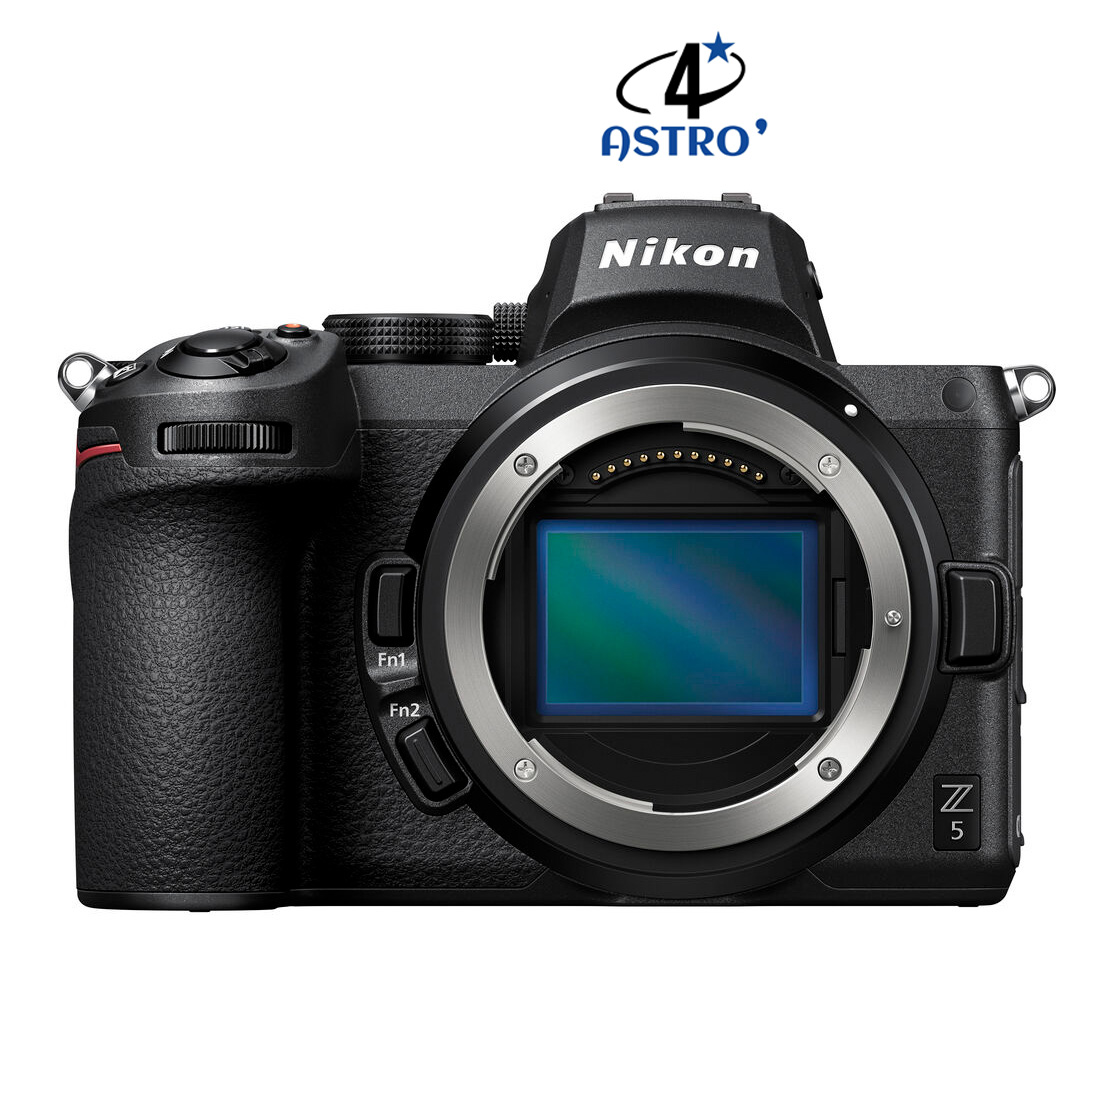 Hybride Nikon Z5 neuf défiltré + refiltré 4'Astro Défiltrage 4'Astro